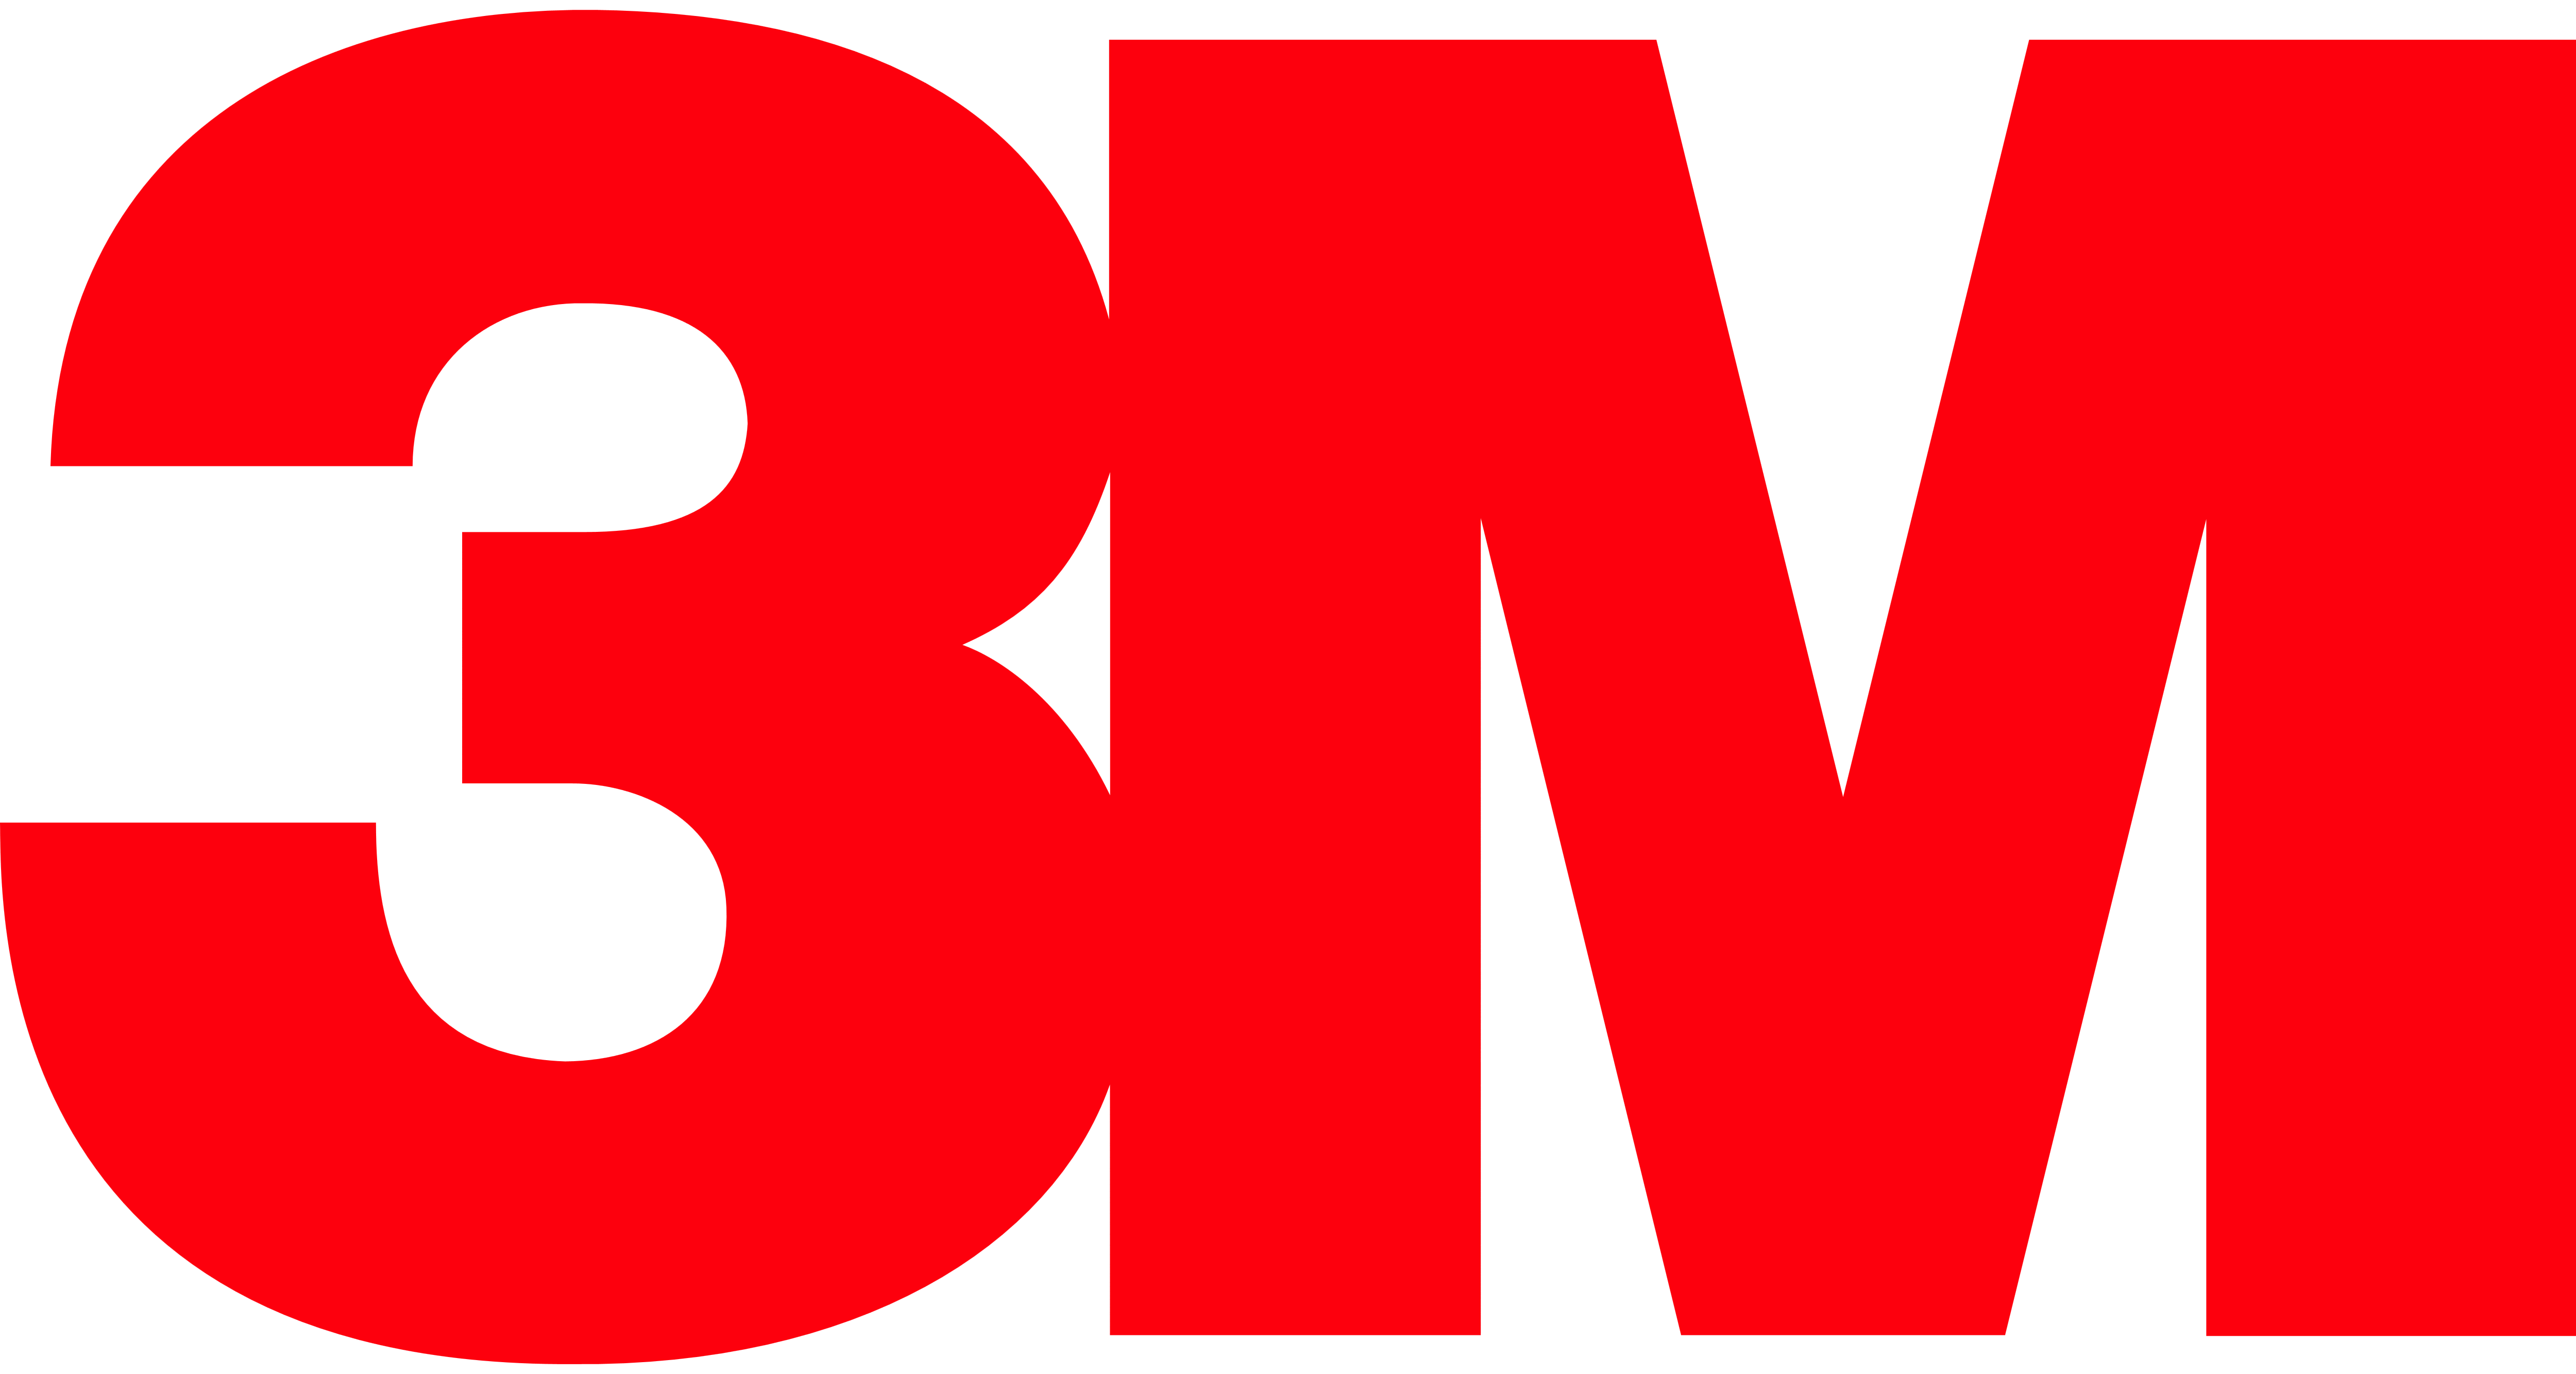 3M_logo_wordmark